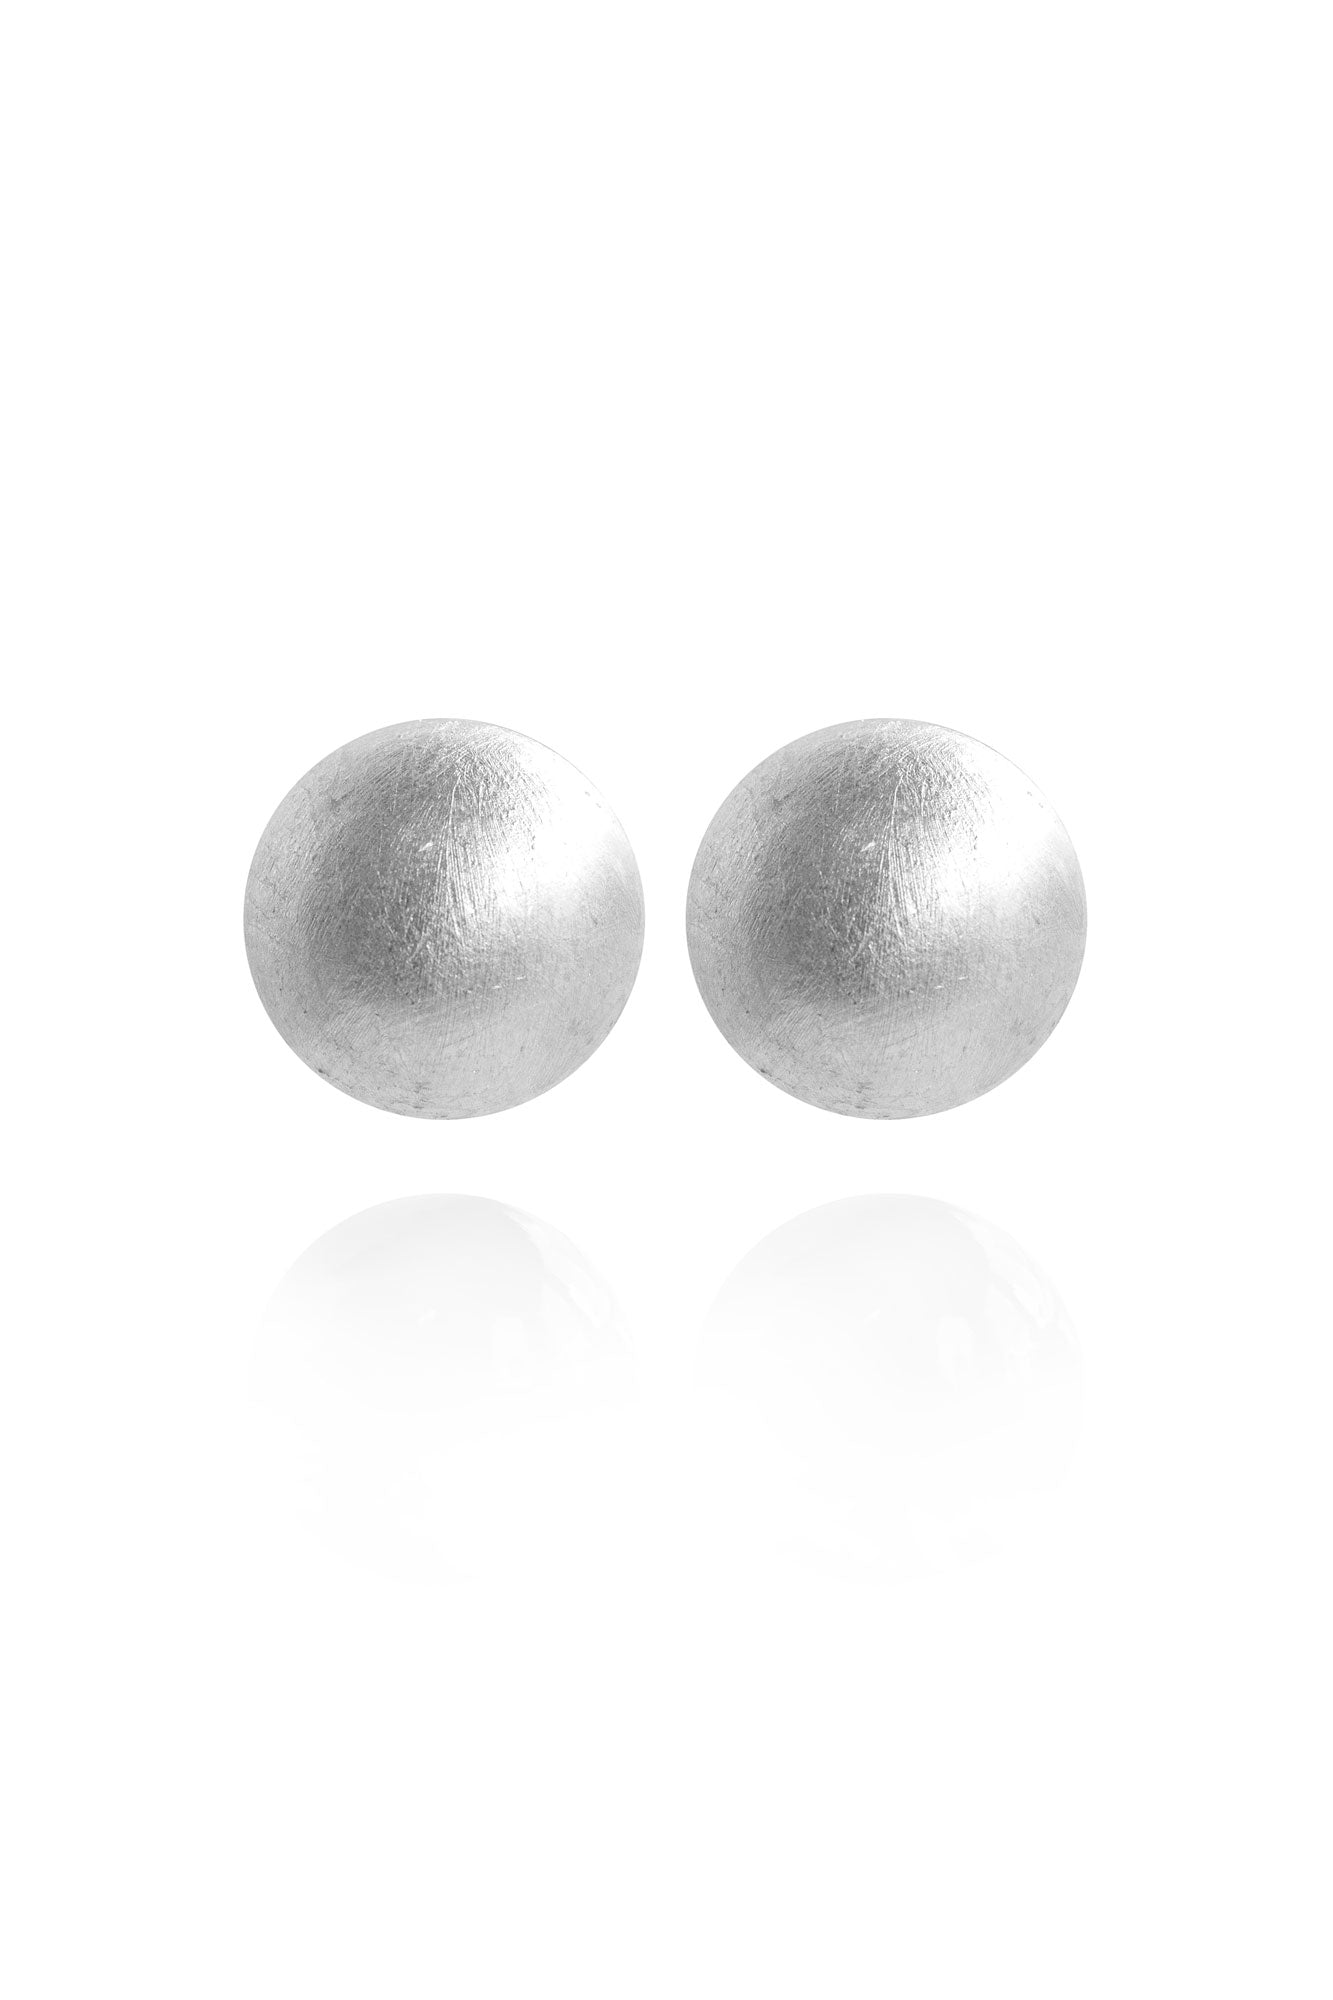 Gaia Earrings in Moonlite Shimmer